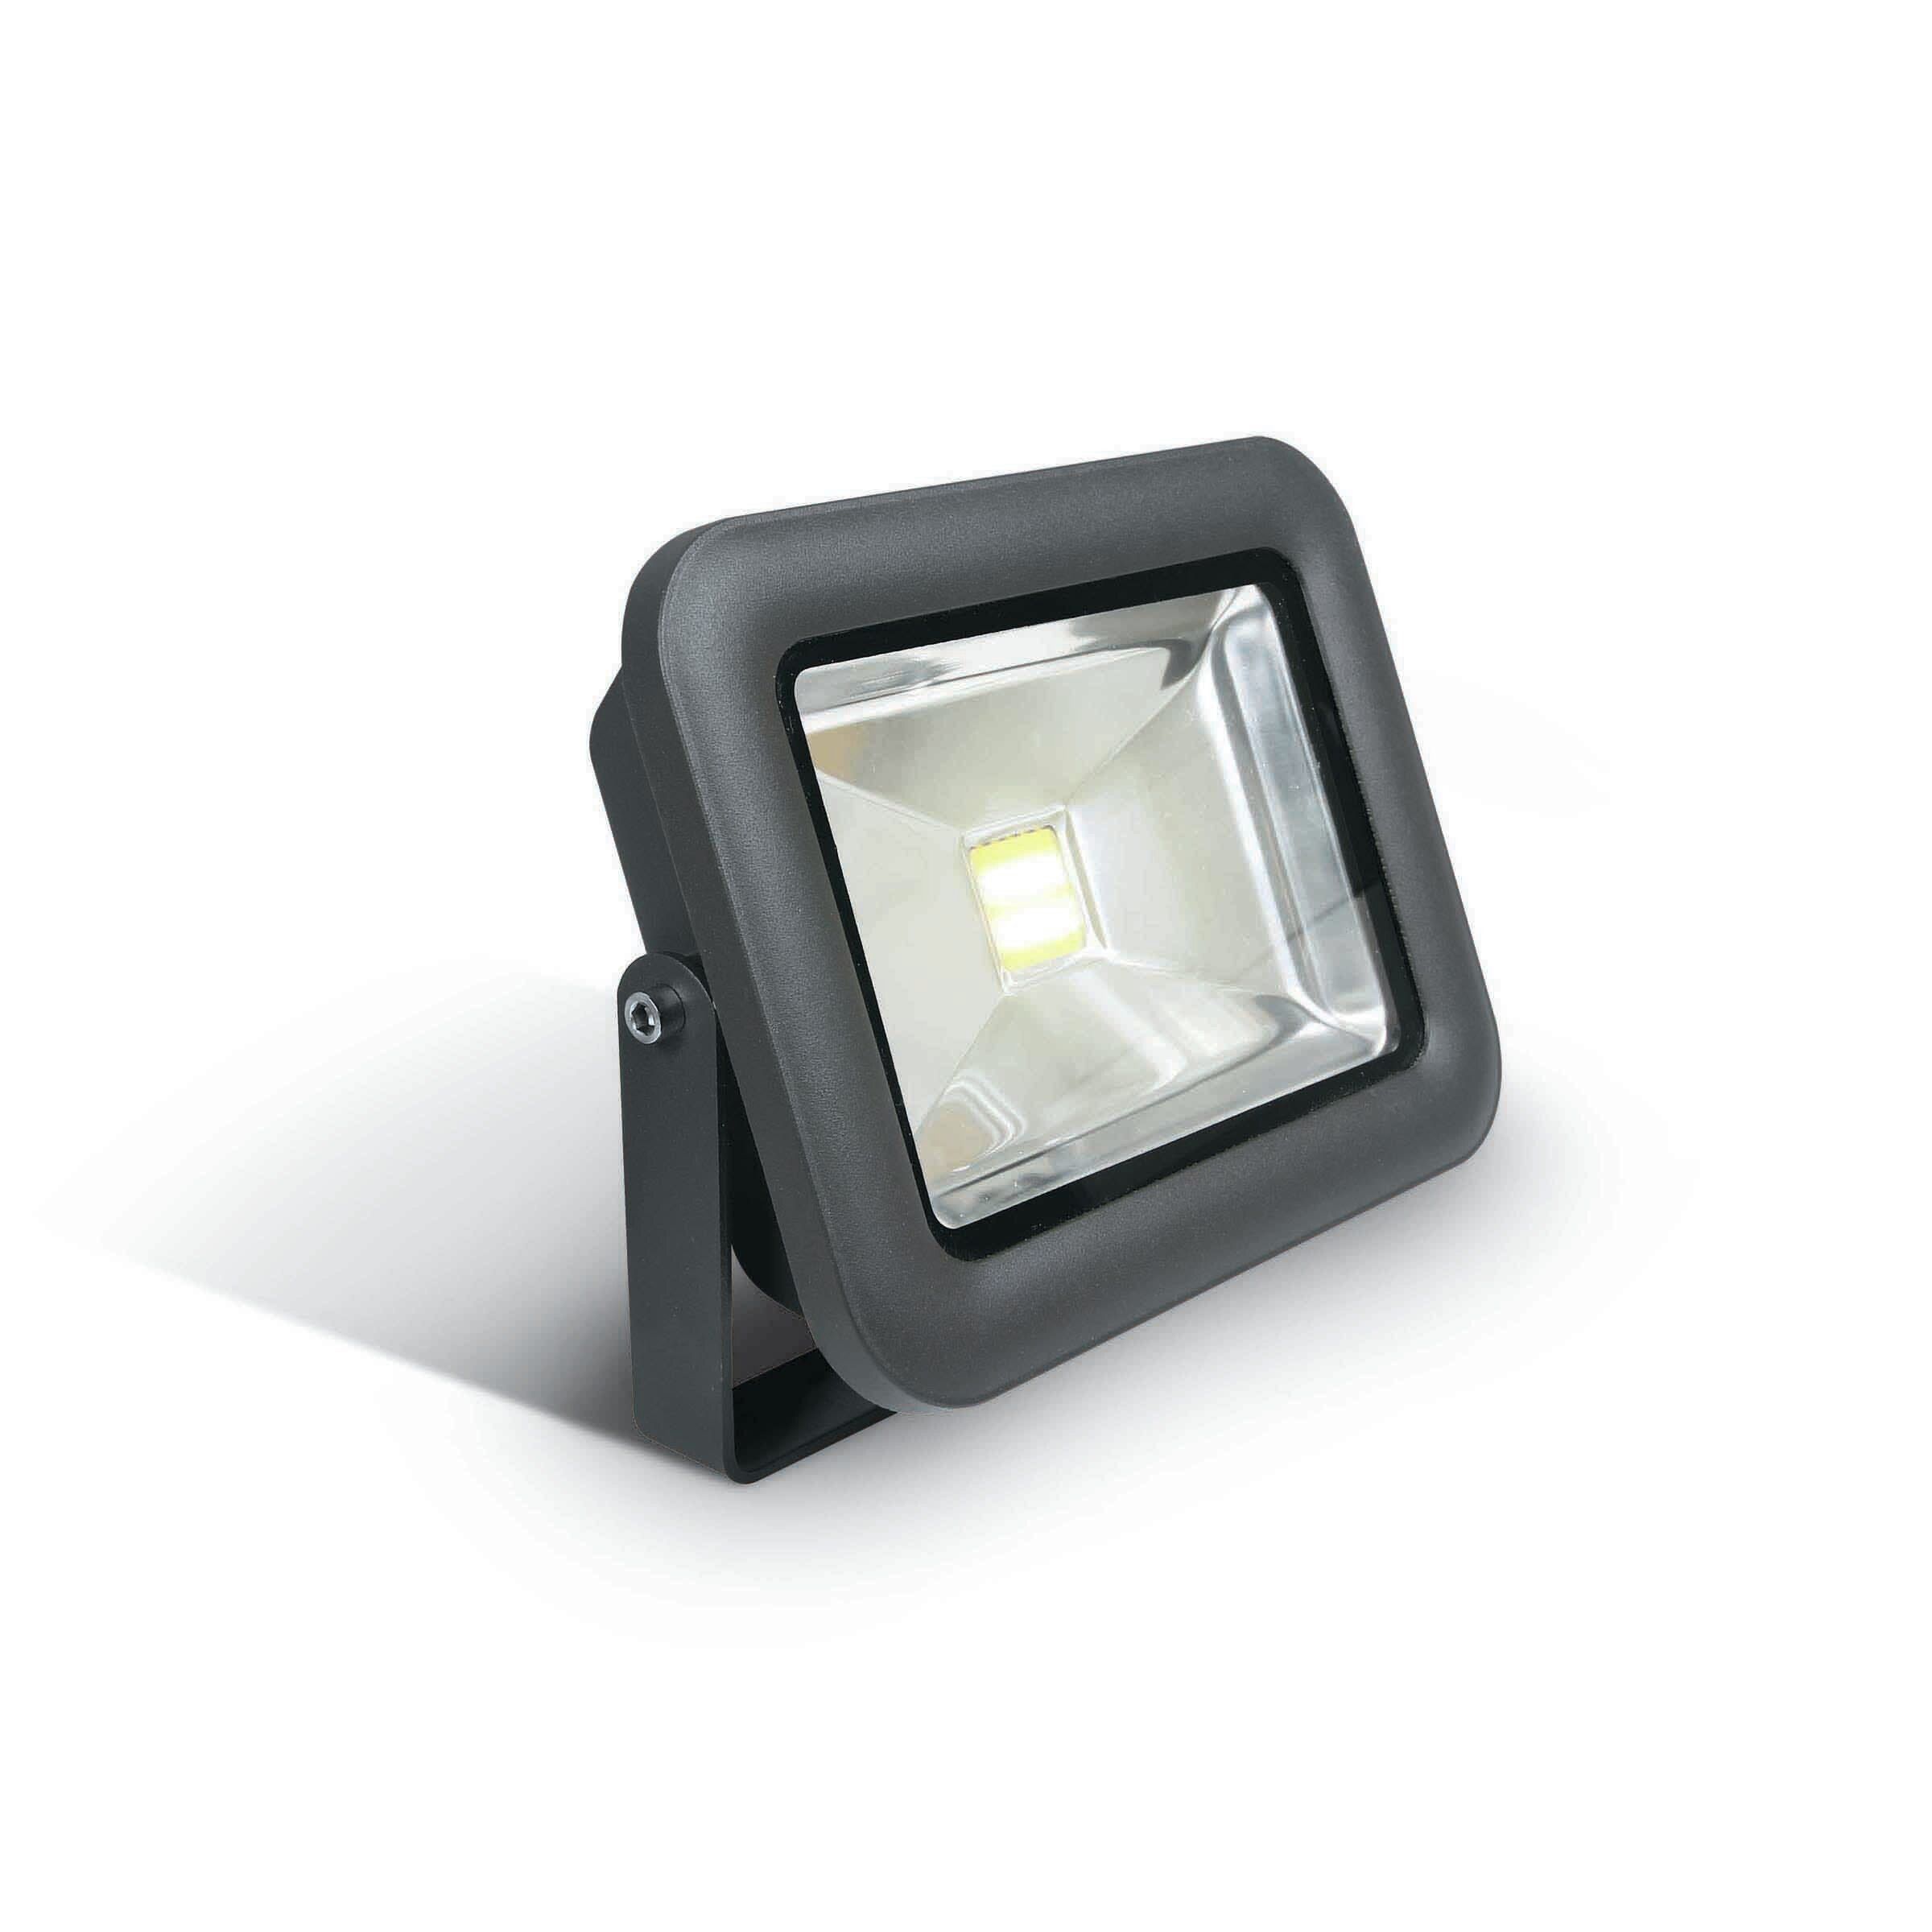 vice versa Citroen strategie ONE Light COB LED Slim Floodlights - verstraler - 15,7 x 5,2 x 12,1 cm -  10W LED incl. - IP65 - antraciet - witte lichtkleur | Lichtkoning